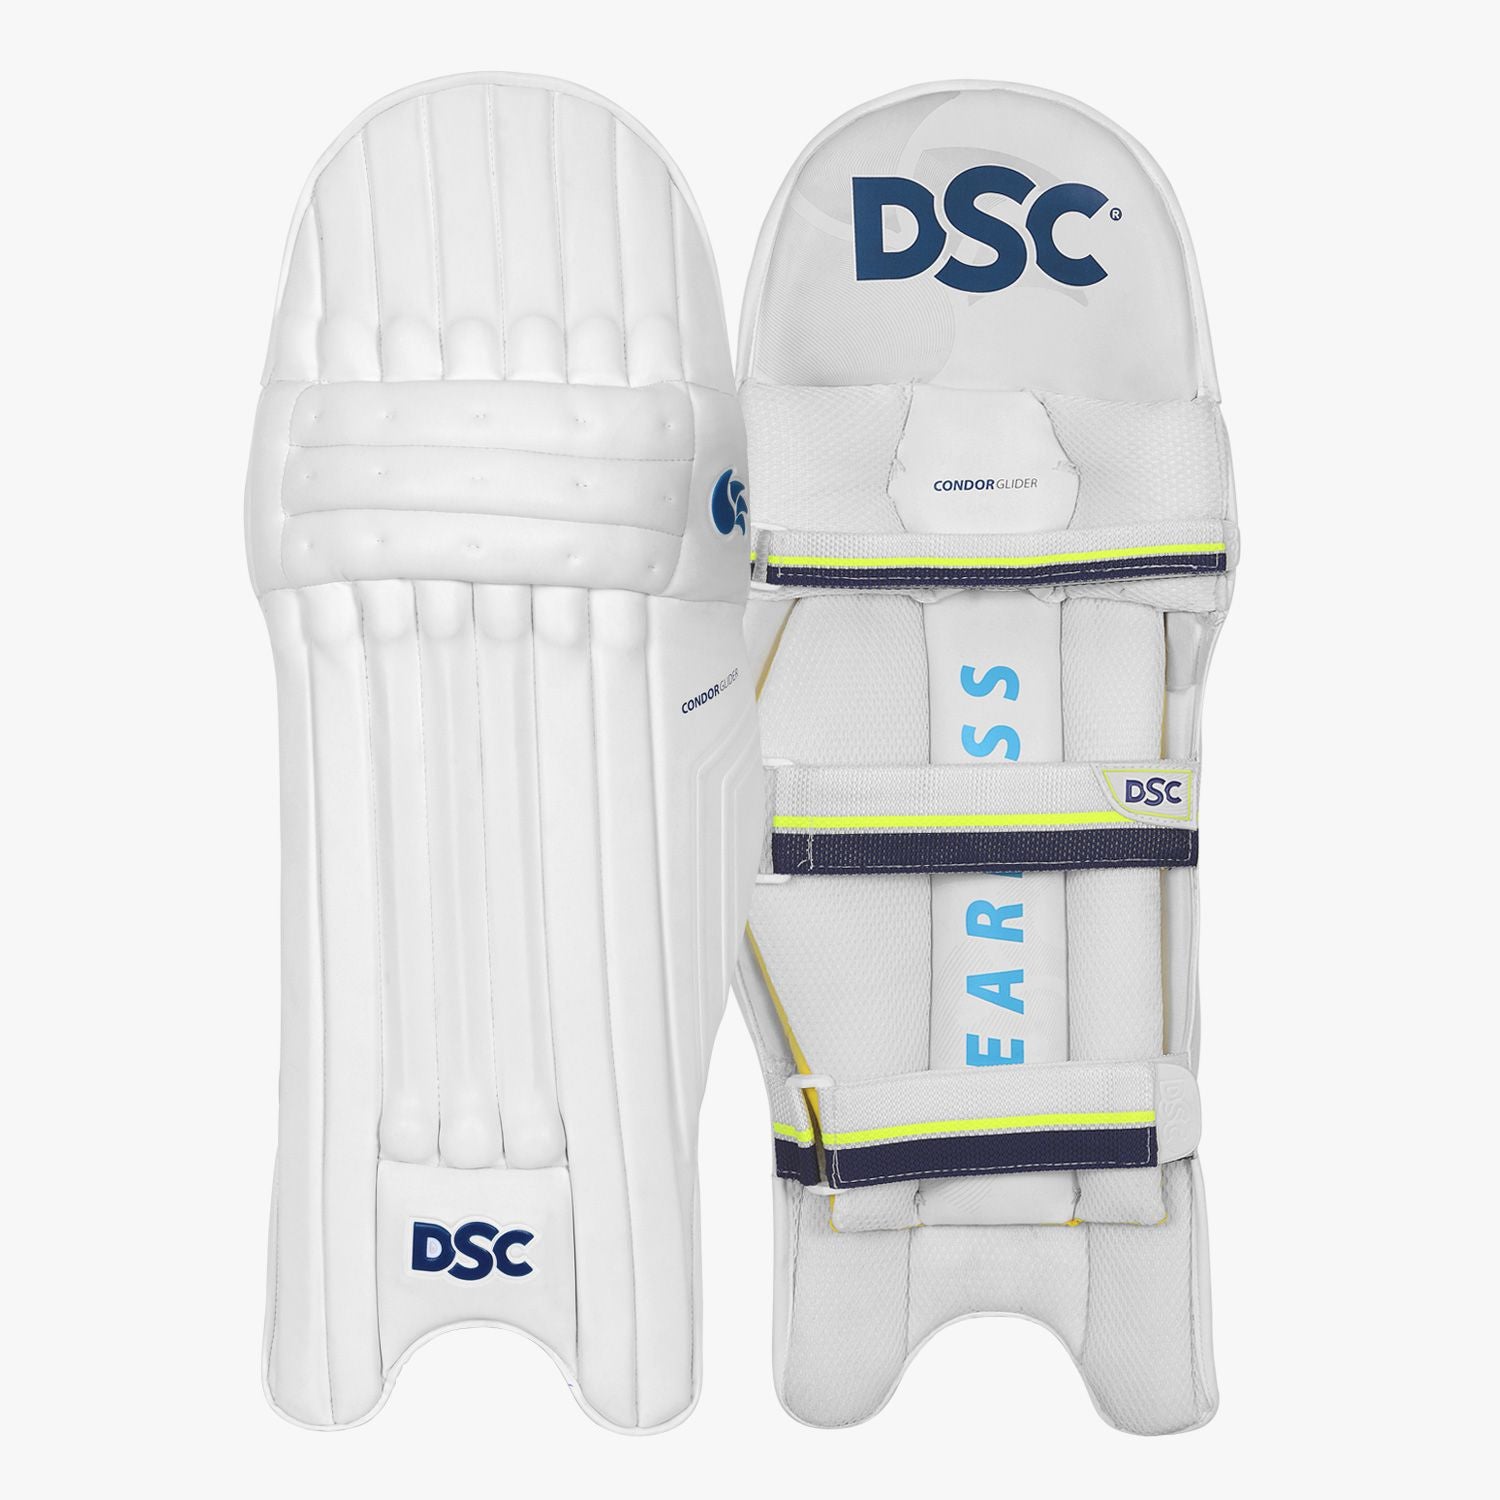 DSC Condor Glider Cricket Batting Leg Guard/Pads